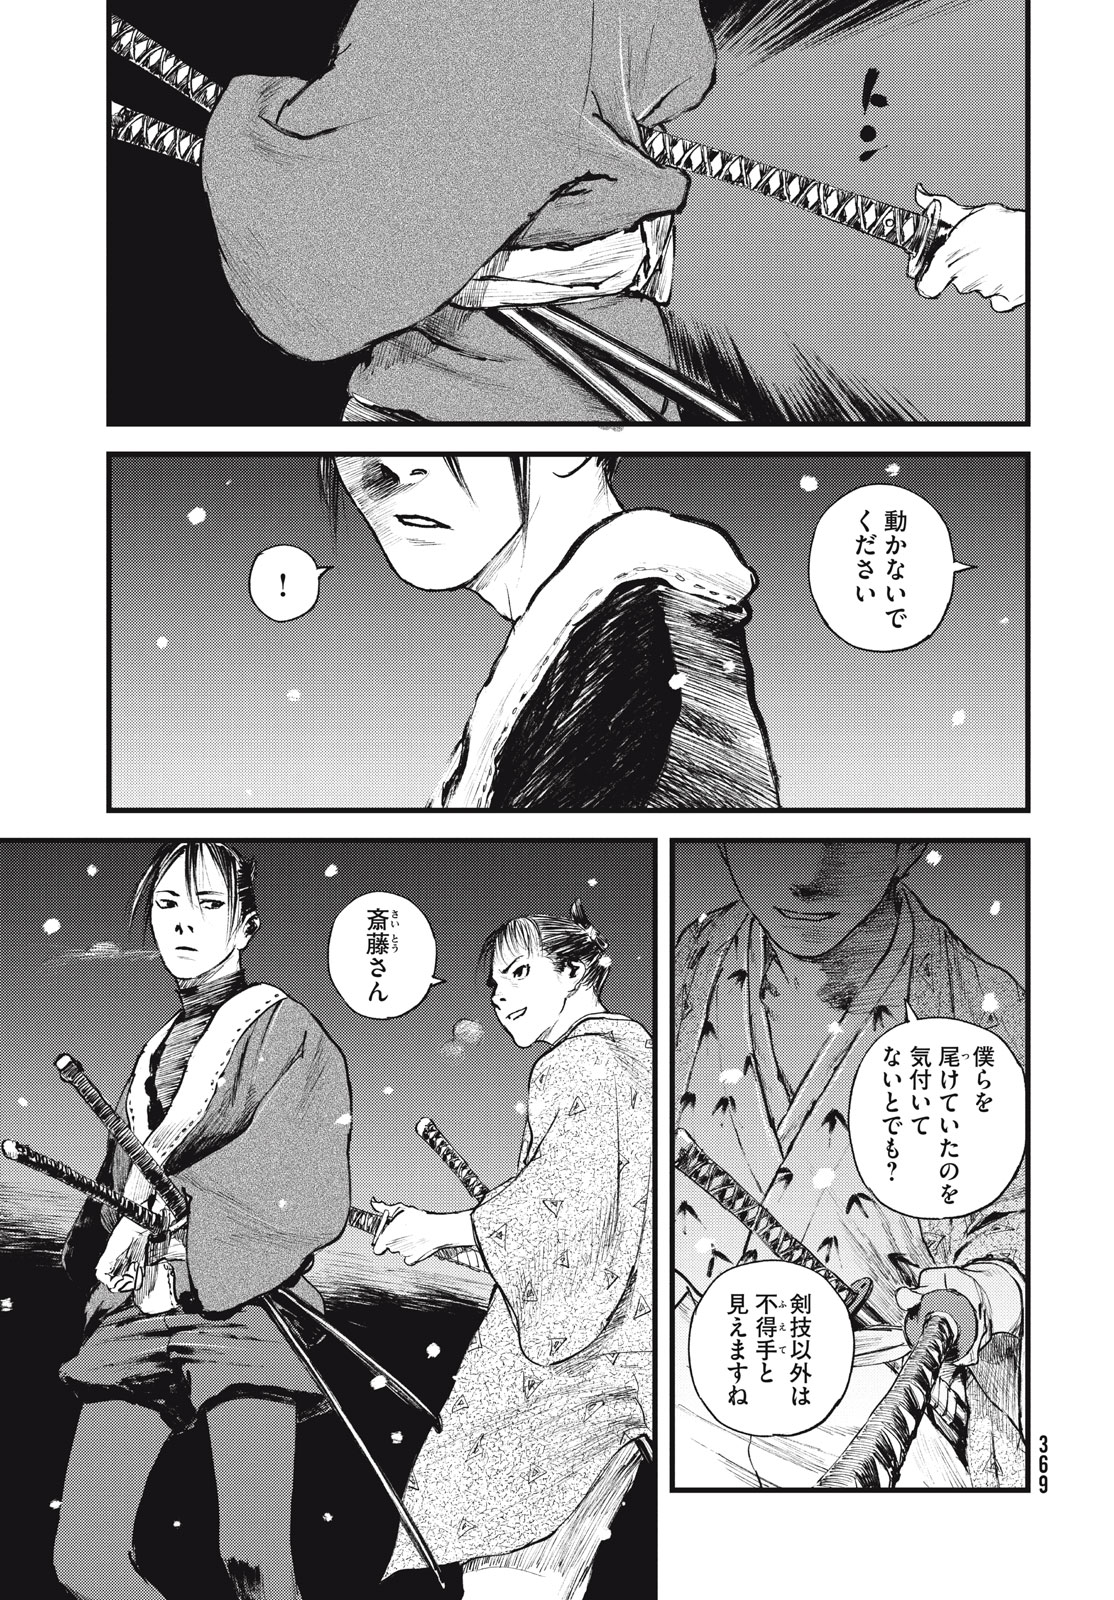 Blade of the Immortal: Bakumatsu Arc - Chapter 54 - Page 23